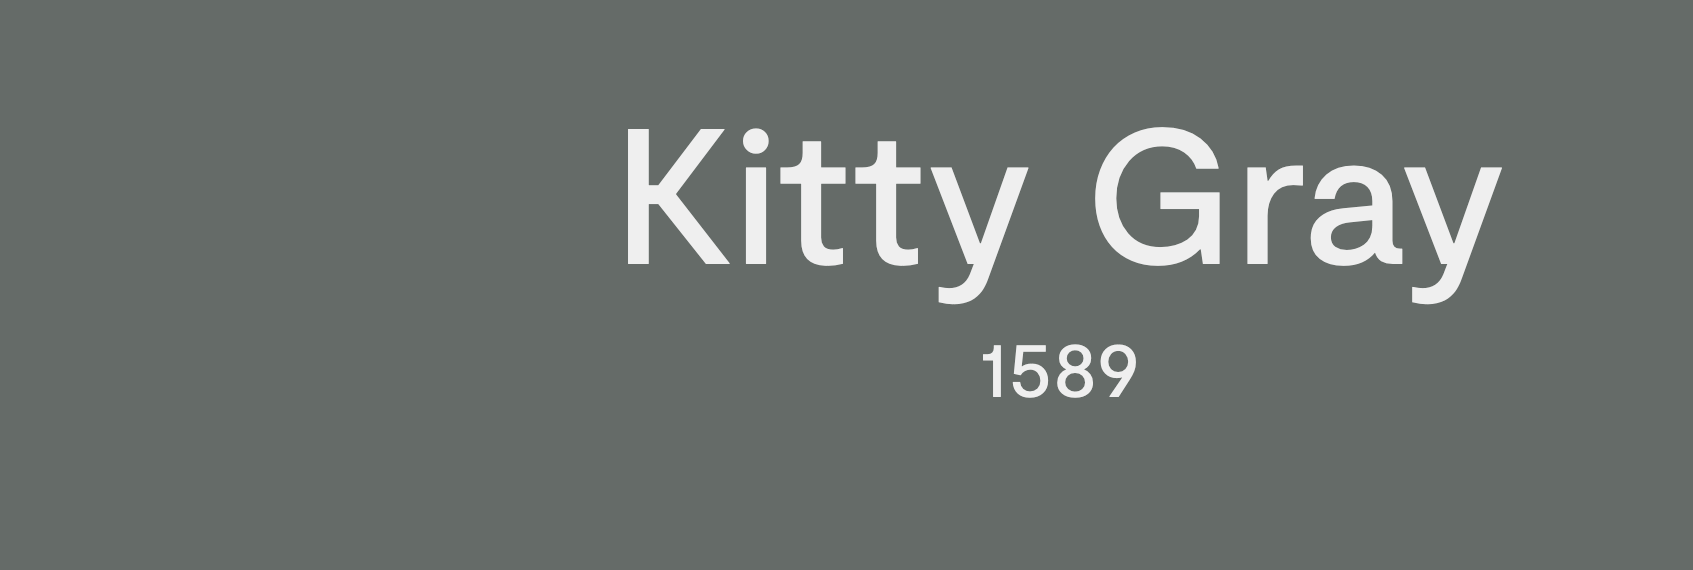 Kitty Gray 1589 - Benjamin Moore - finalizing paint colors